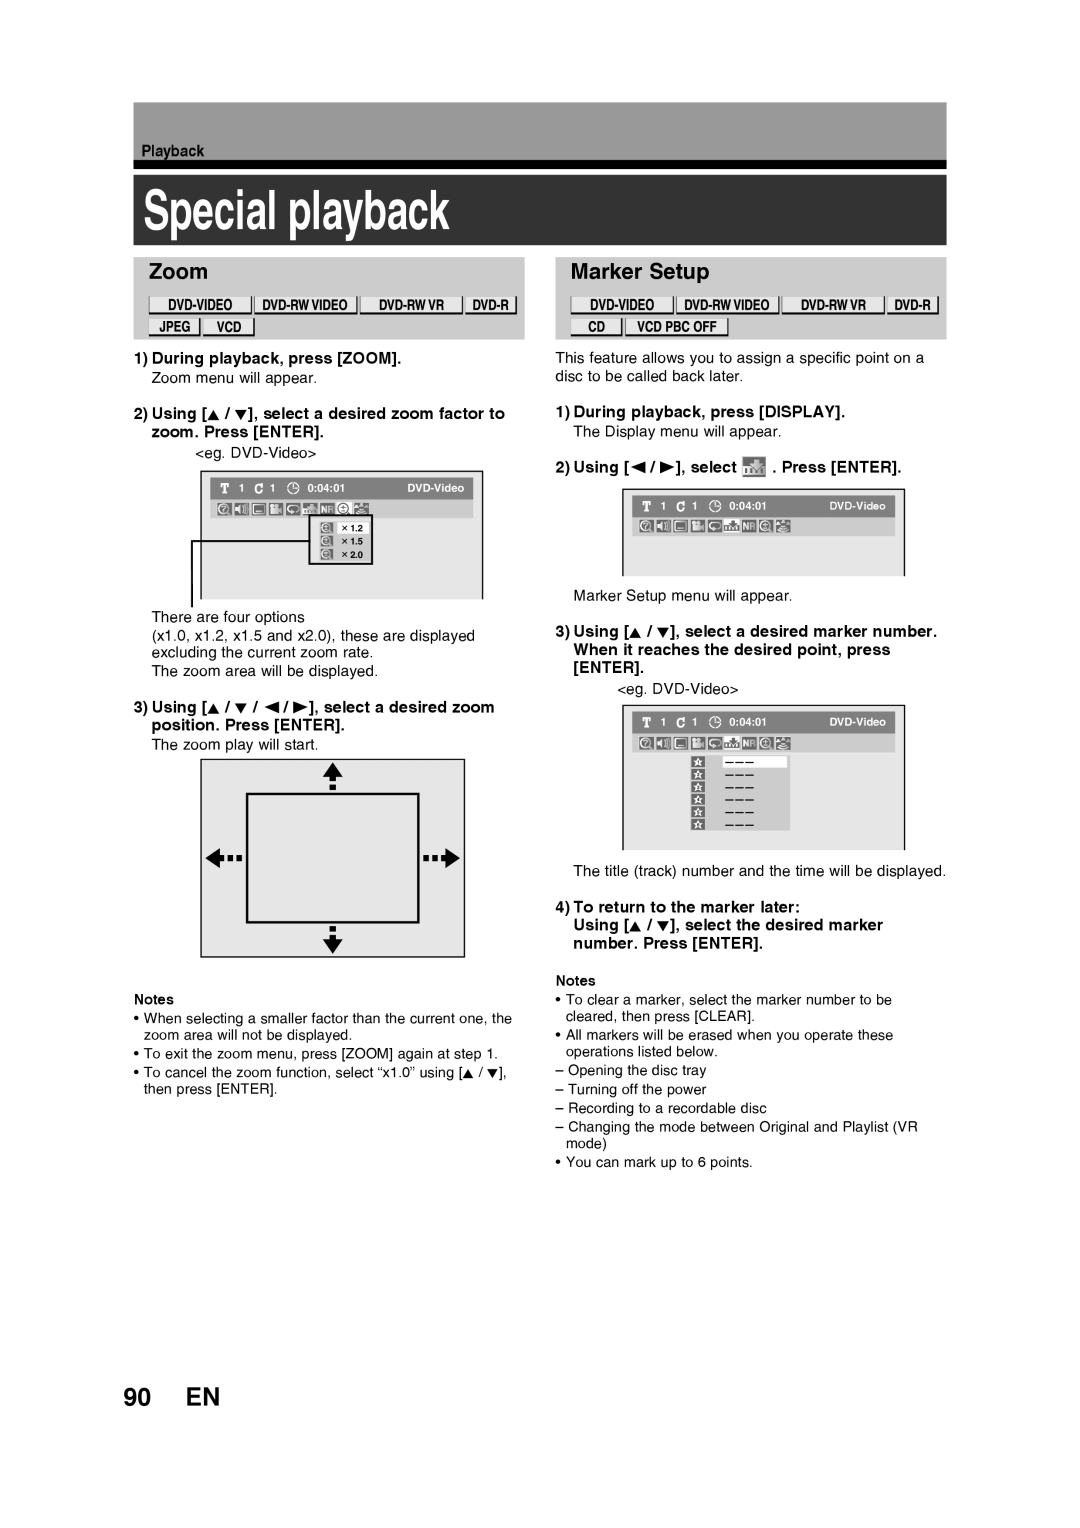 Toshiba D-RW2SU/D-RW2SC manual Special playback, 90 EN, Zoom, Marker Setup, During playback, press DISPLAY, Playback 